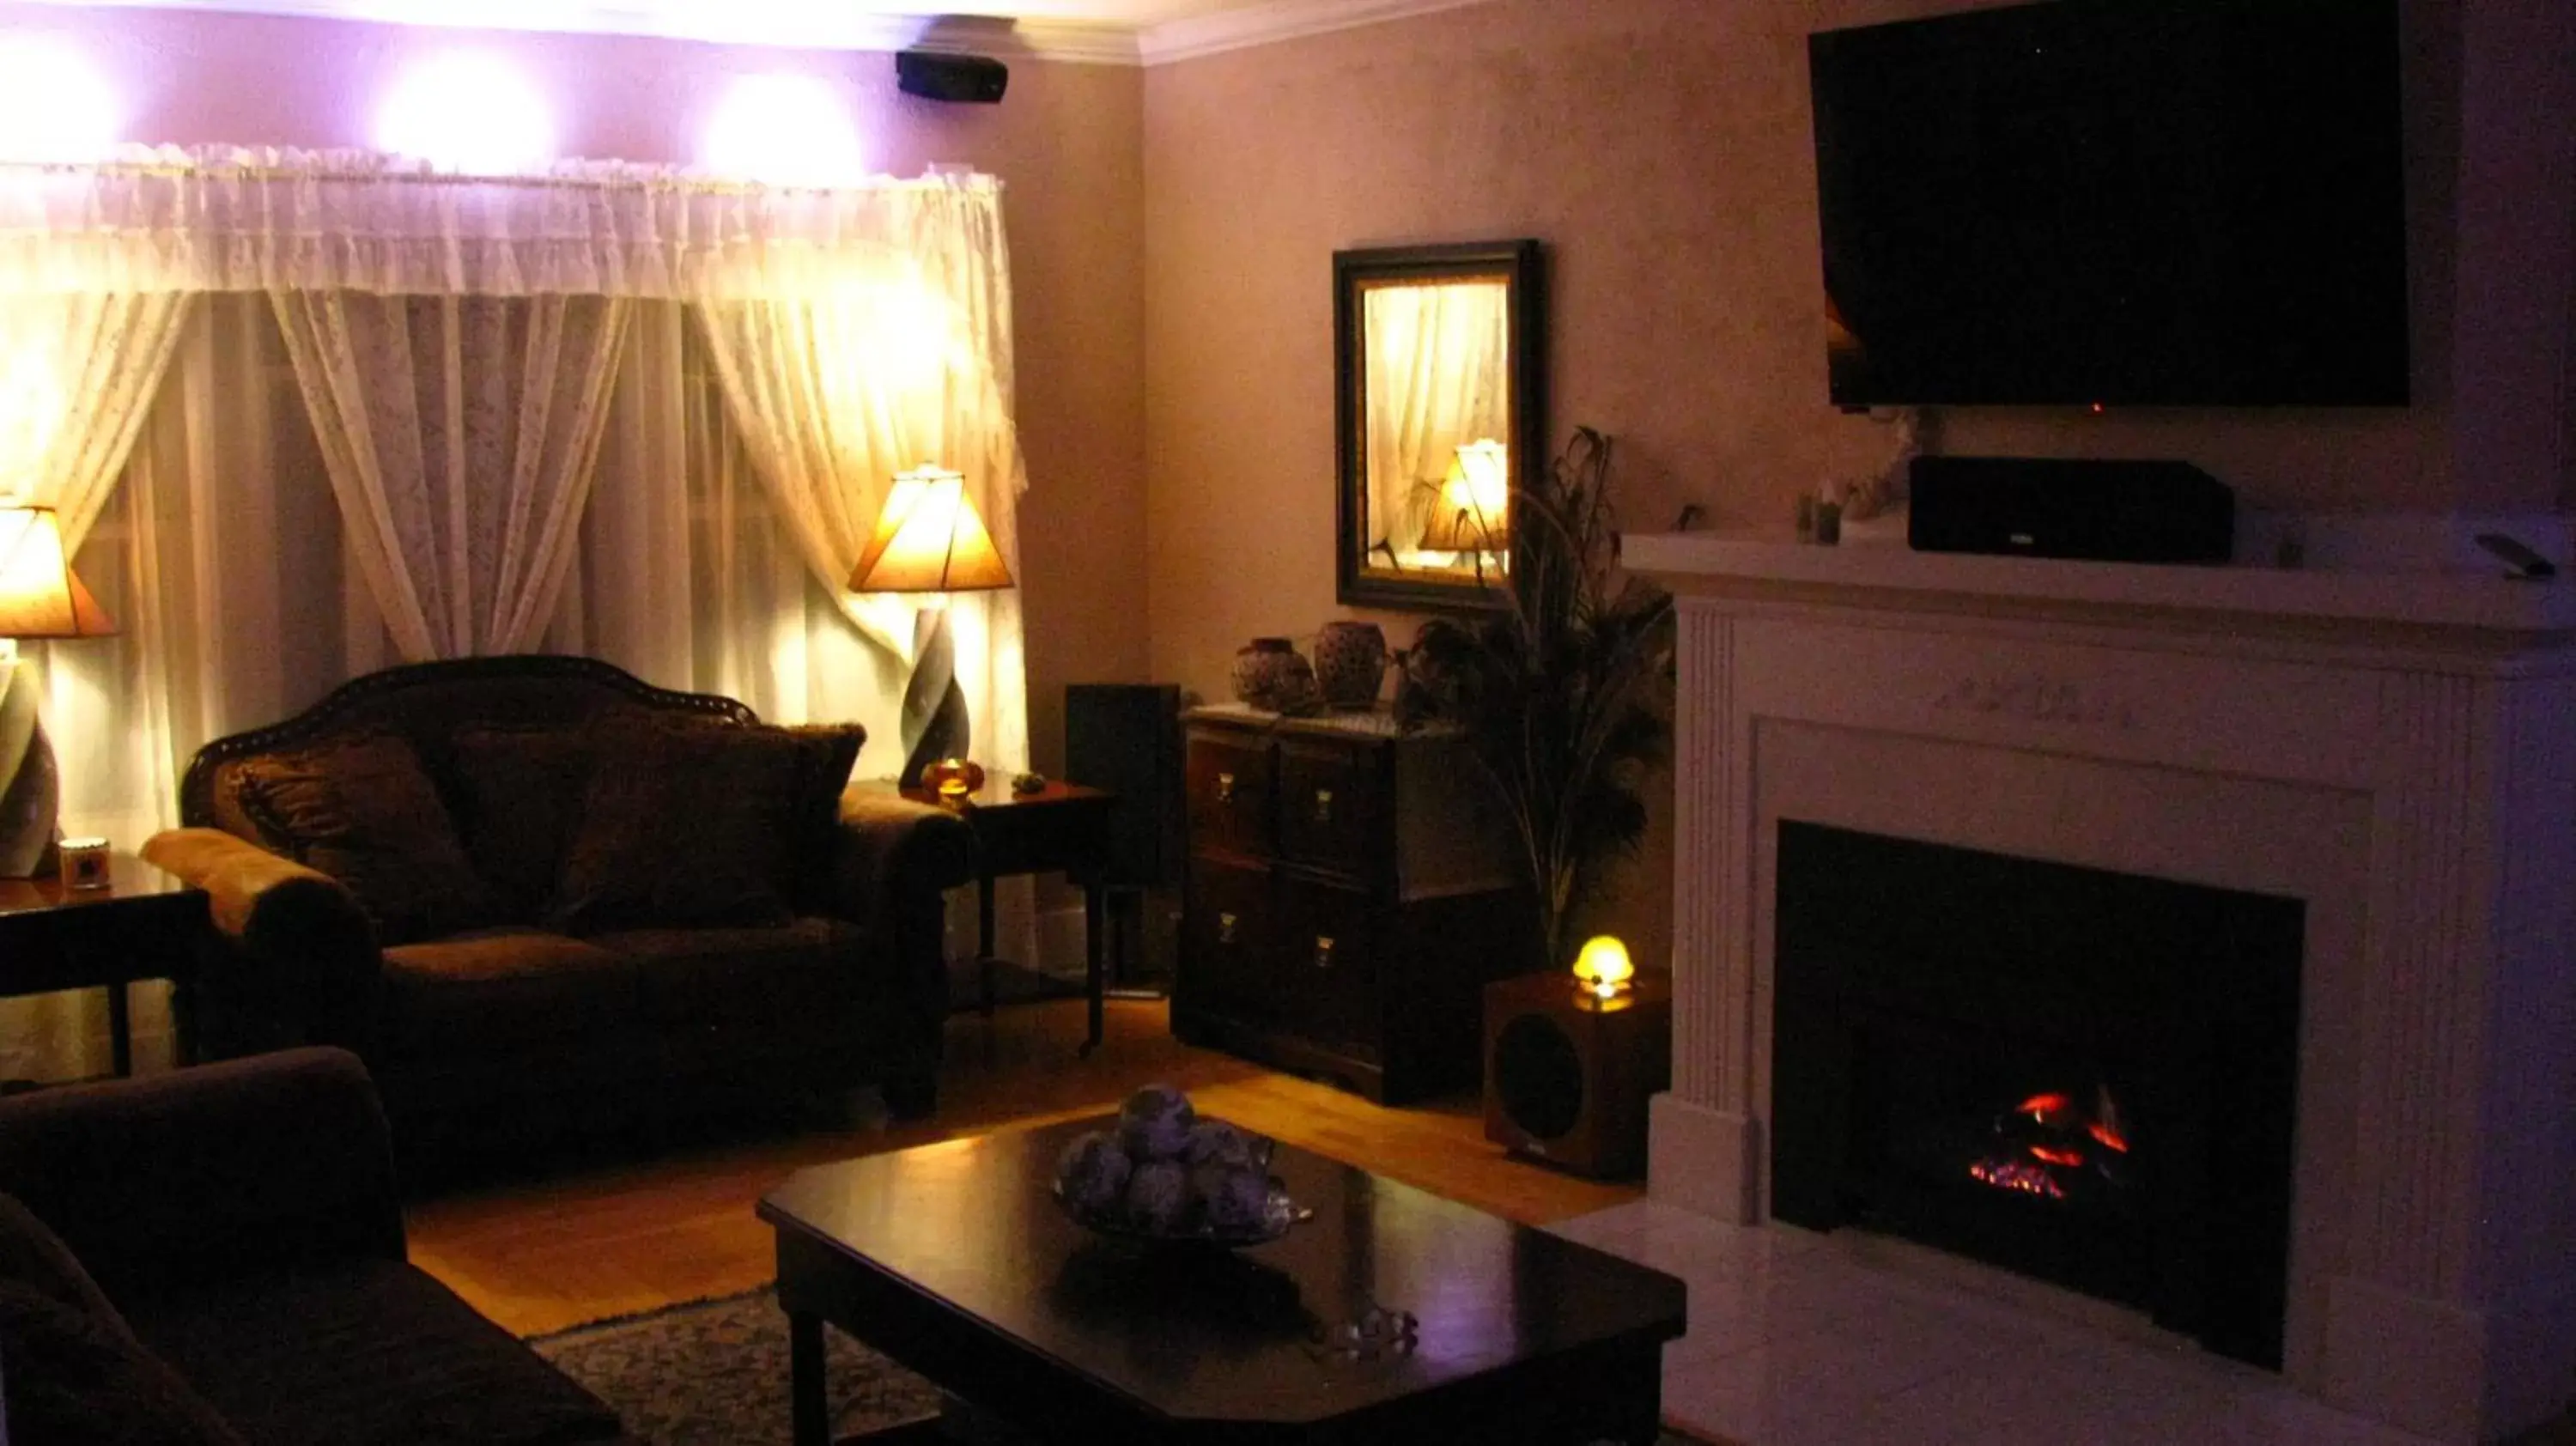 TV and multimedia, Seating Area in Terraluna Inn